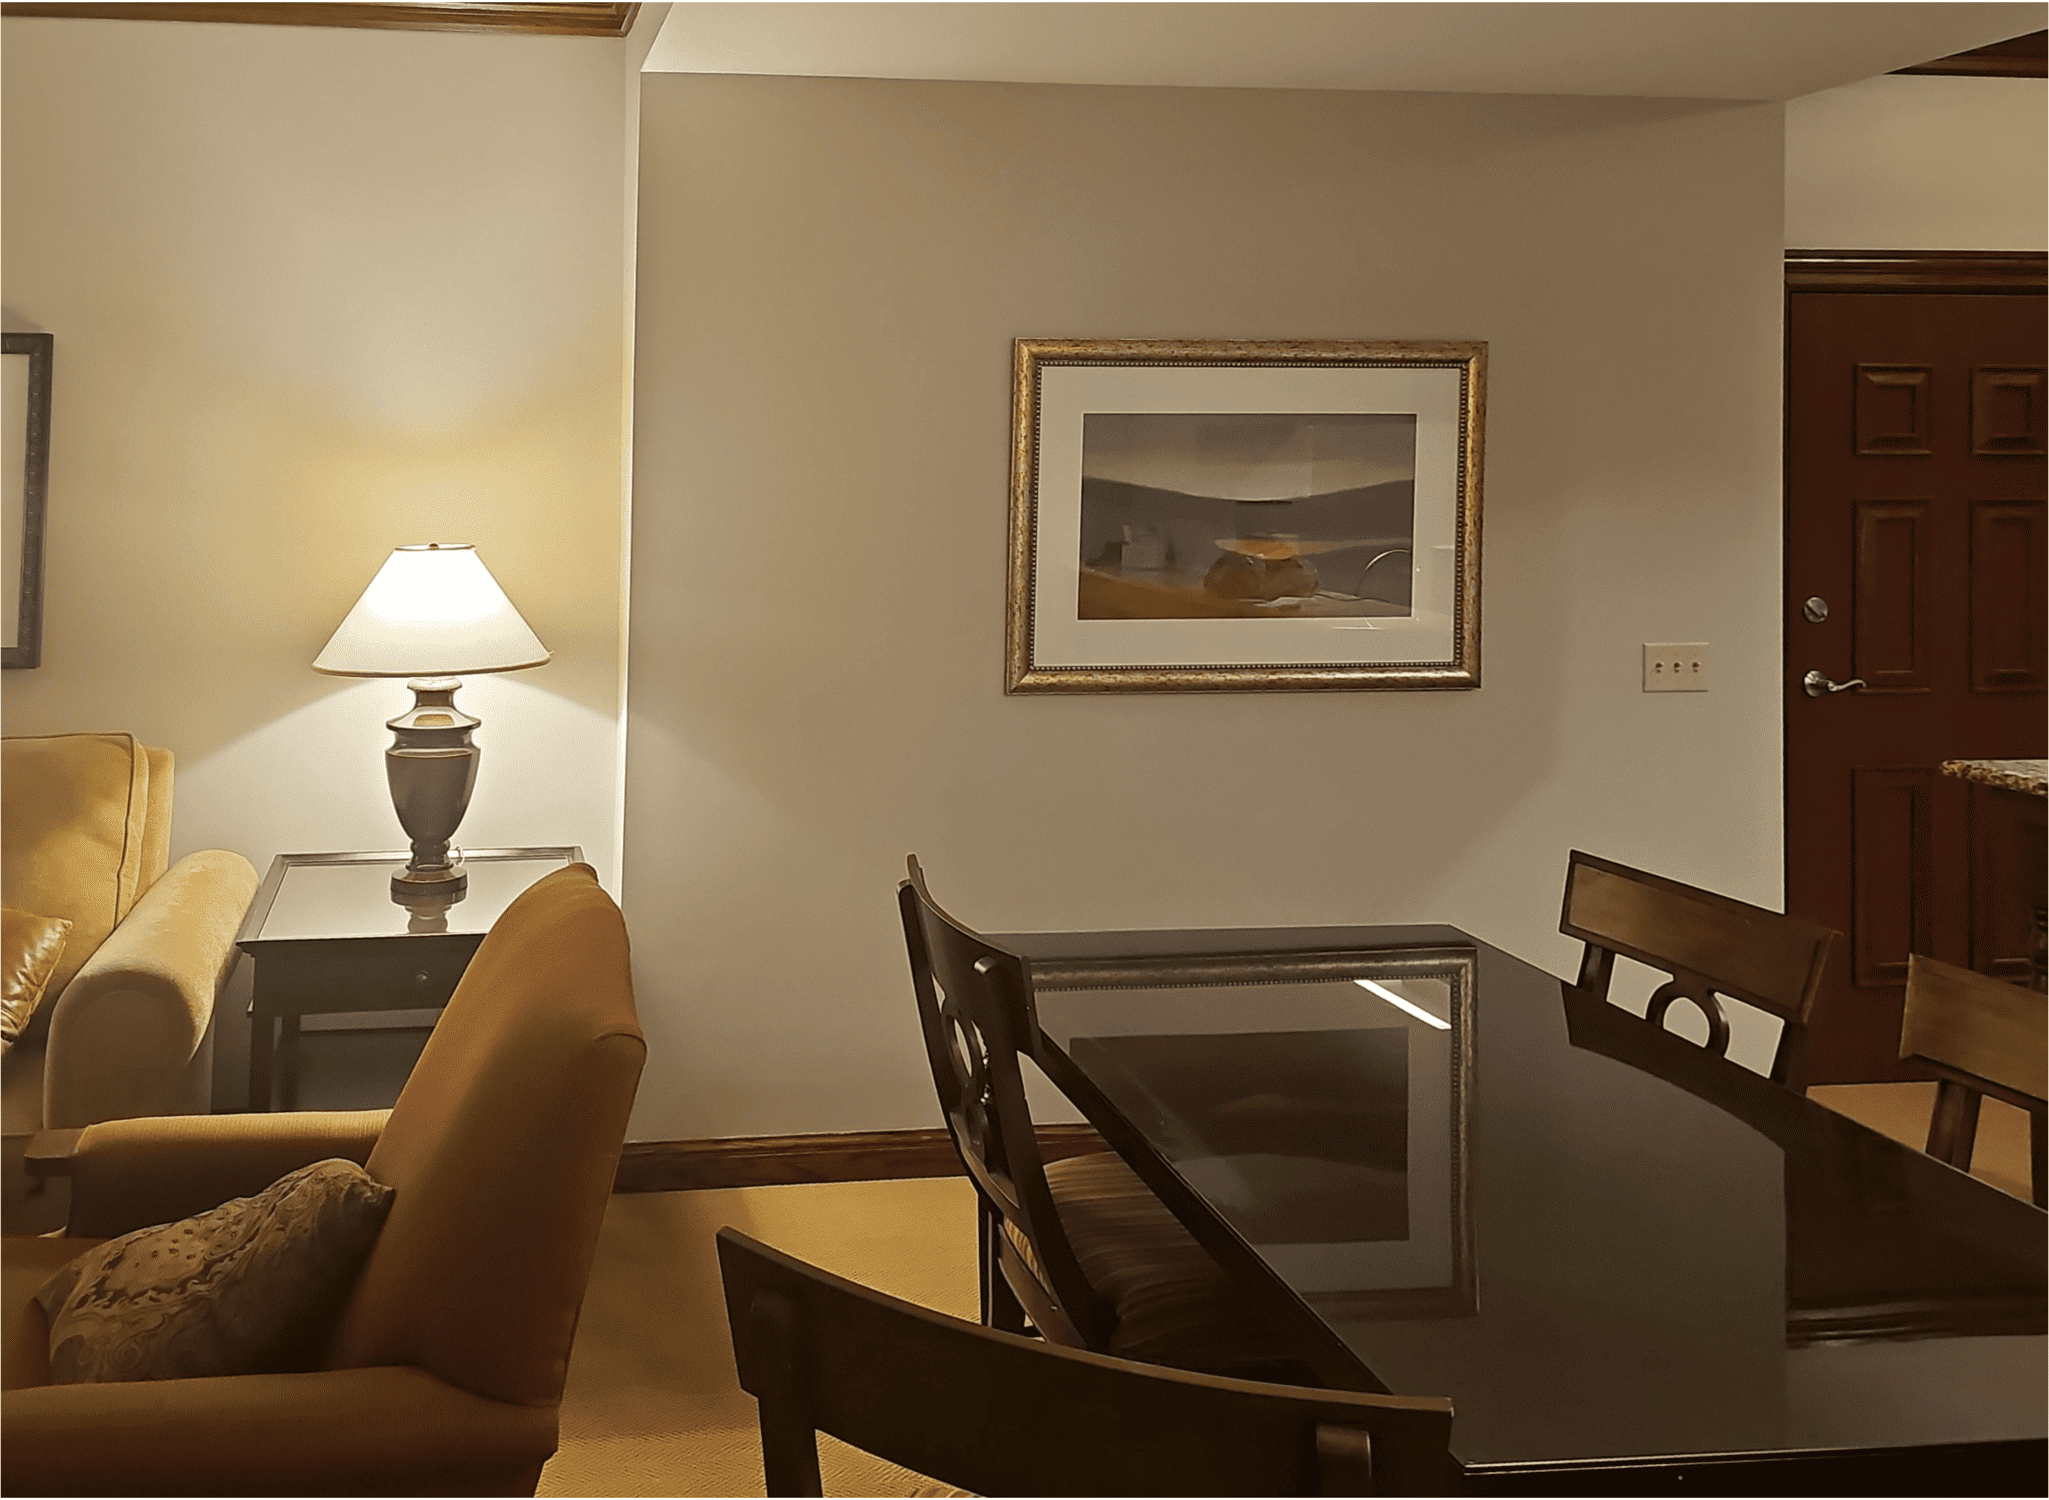 Minimalist dining room with warm lighting